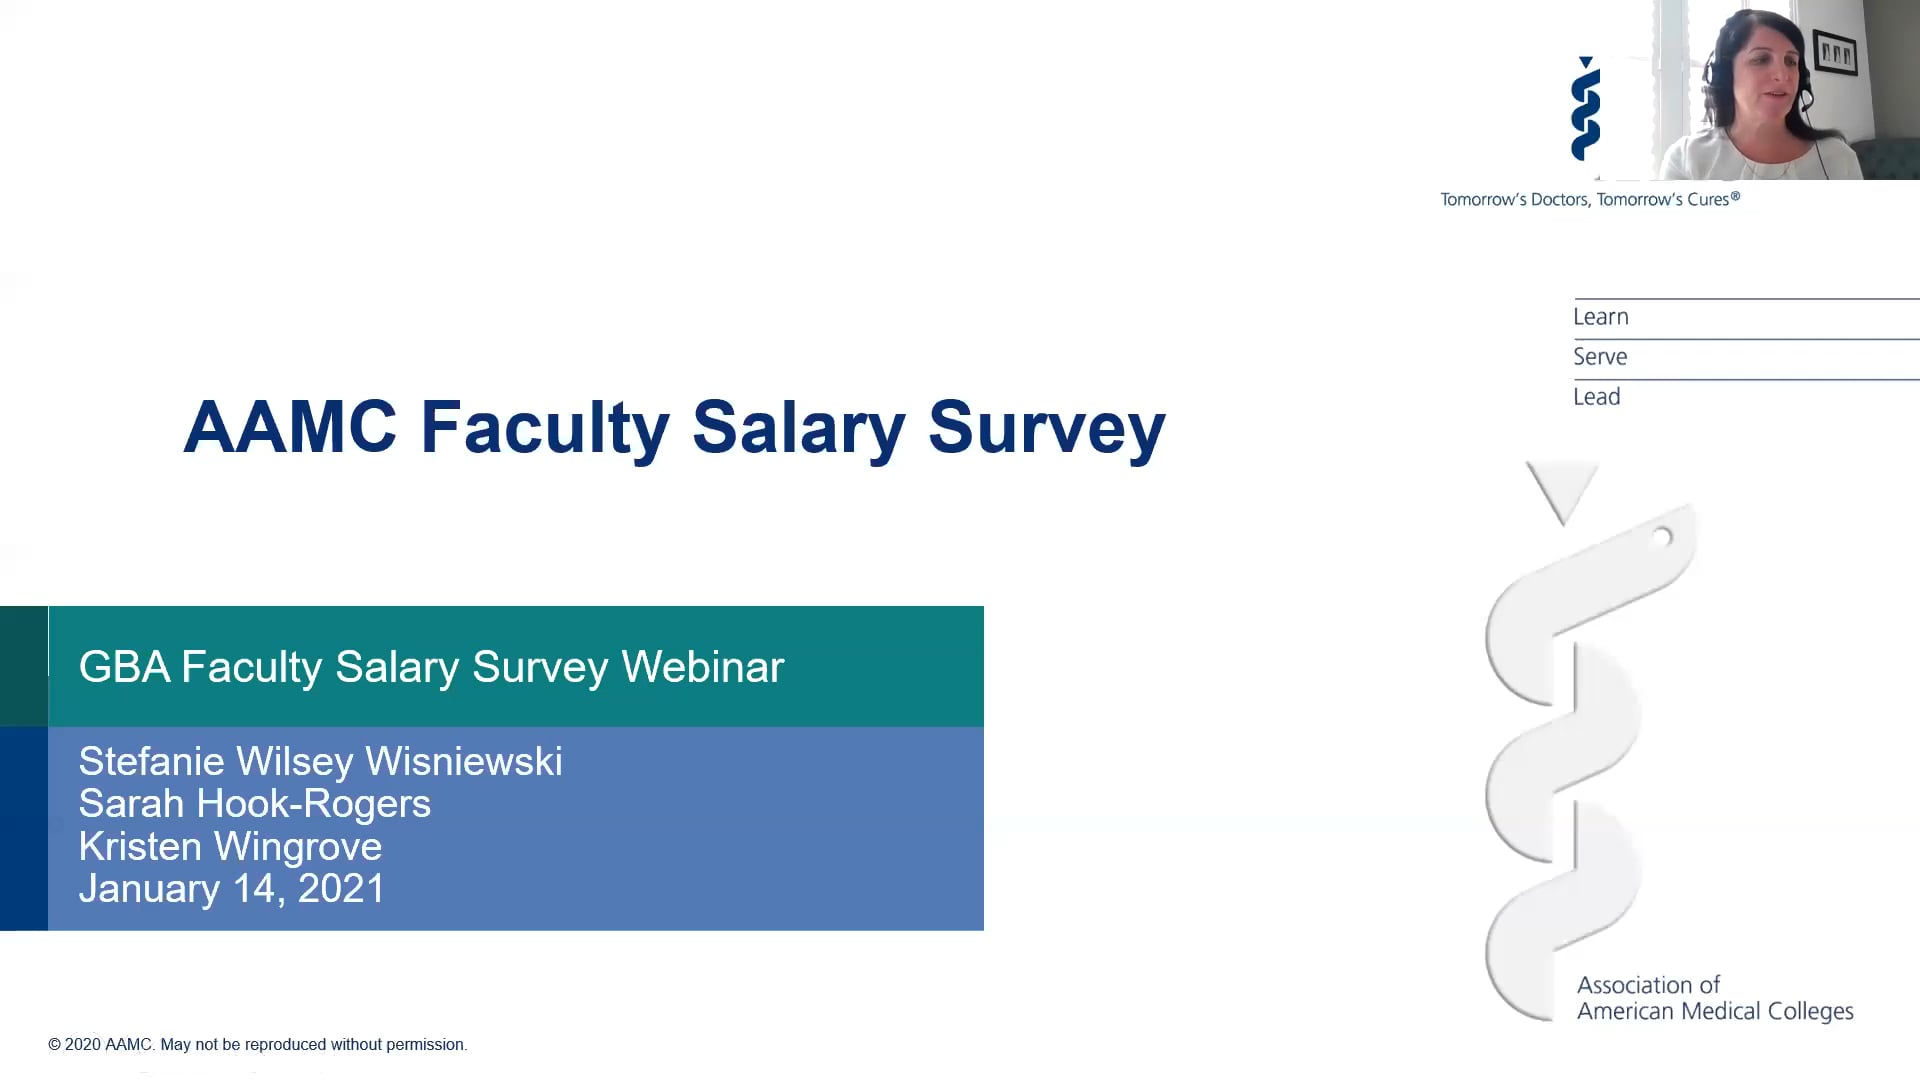 GBA Webinar RealWorld Uses of the AAMC Faculty Salary Survey 1.14.